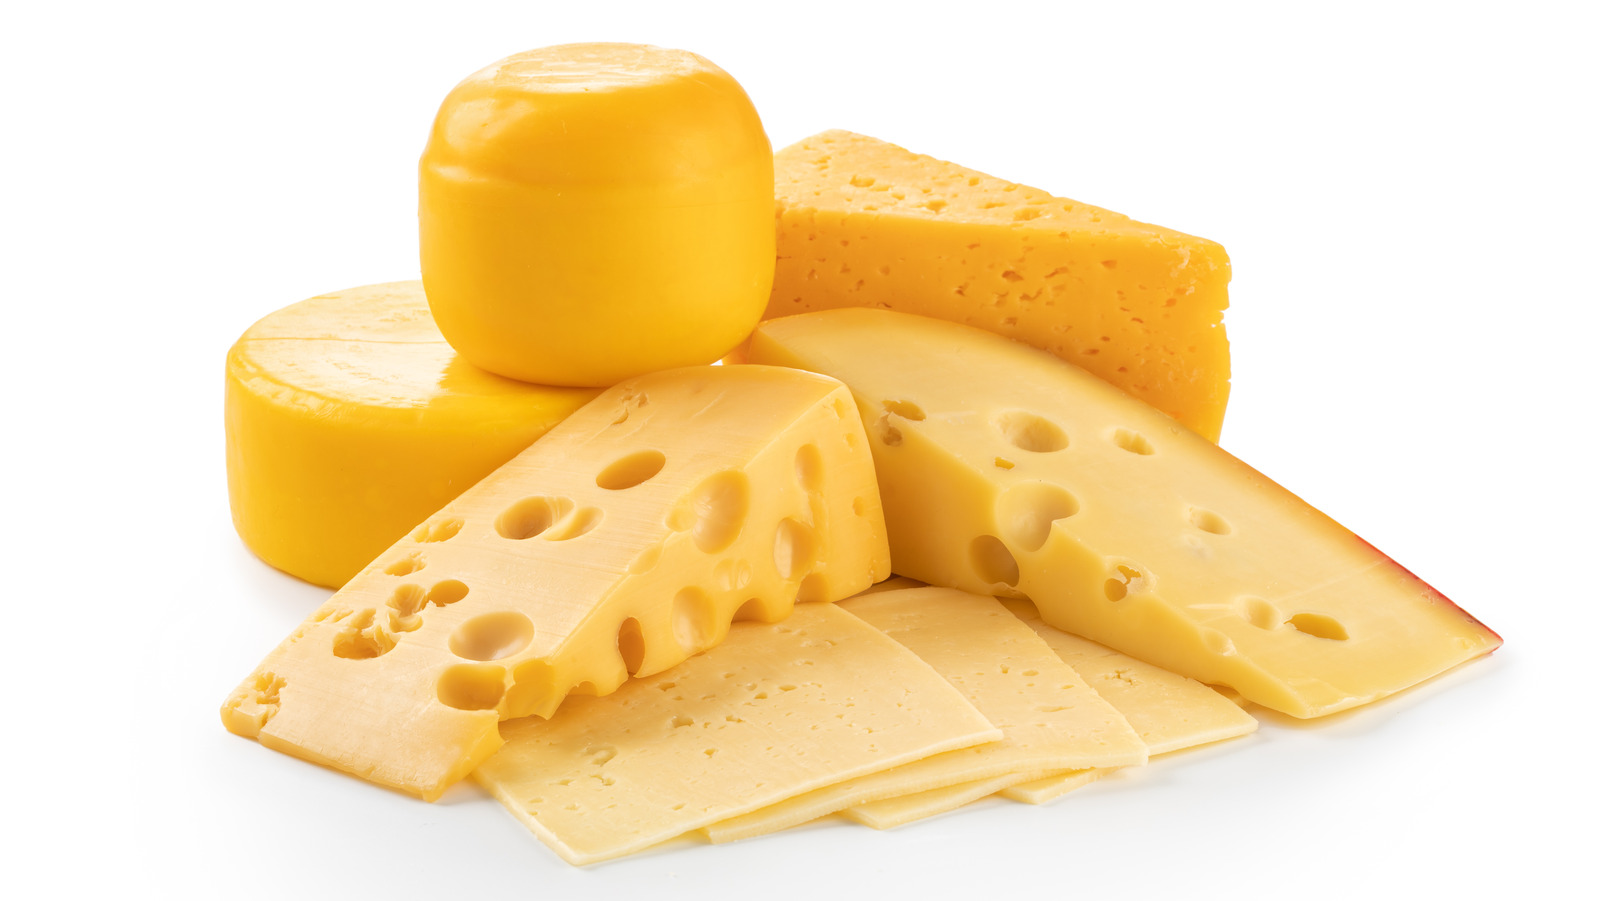 Swiss cheese (North America) - Wikipedia